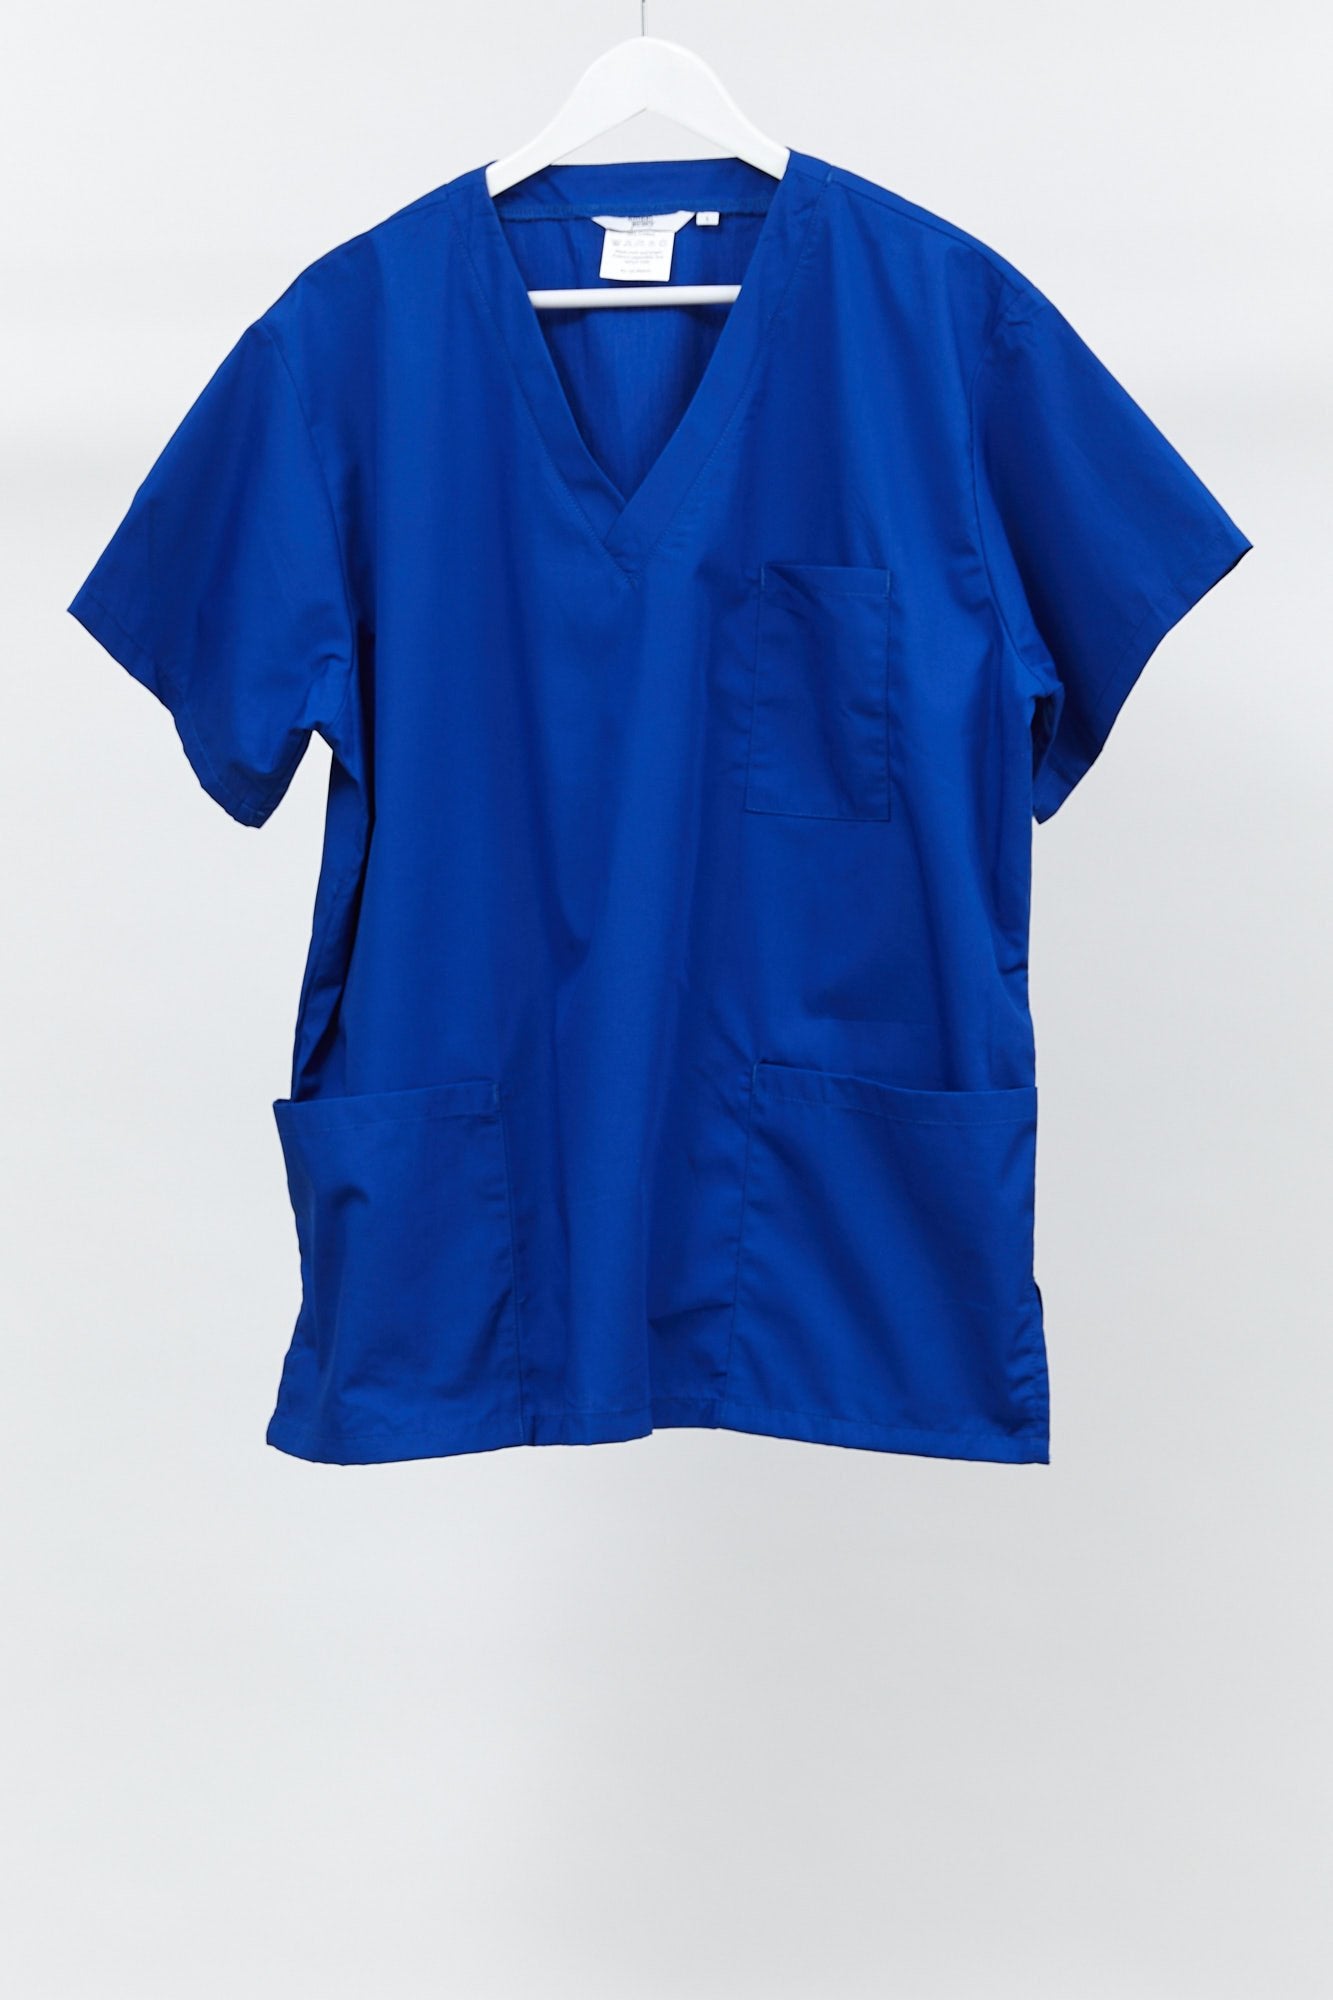 Blue scrubs medical top: size Medium